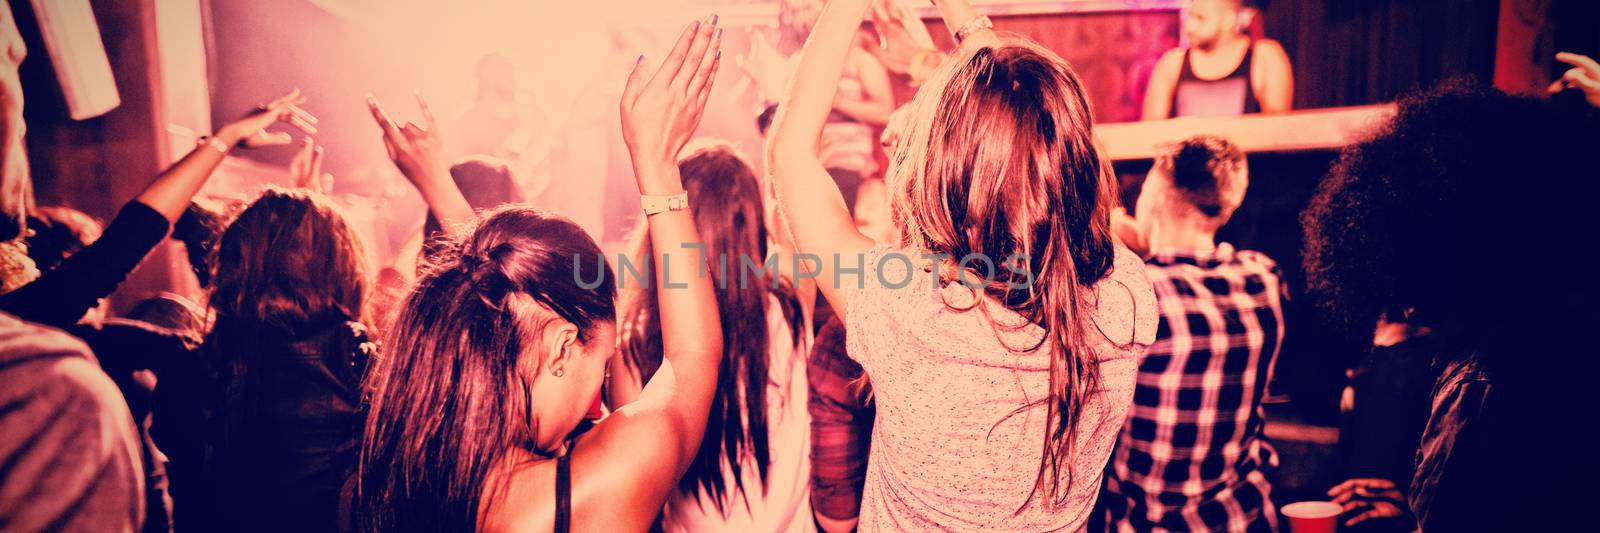 People enjoying music in nightclub